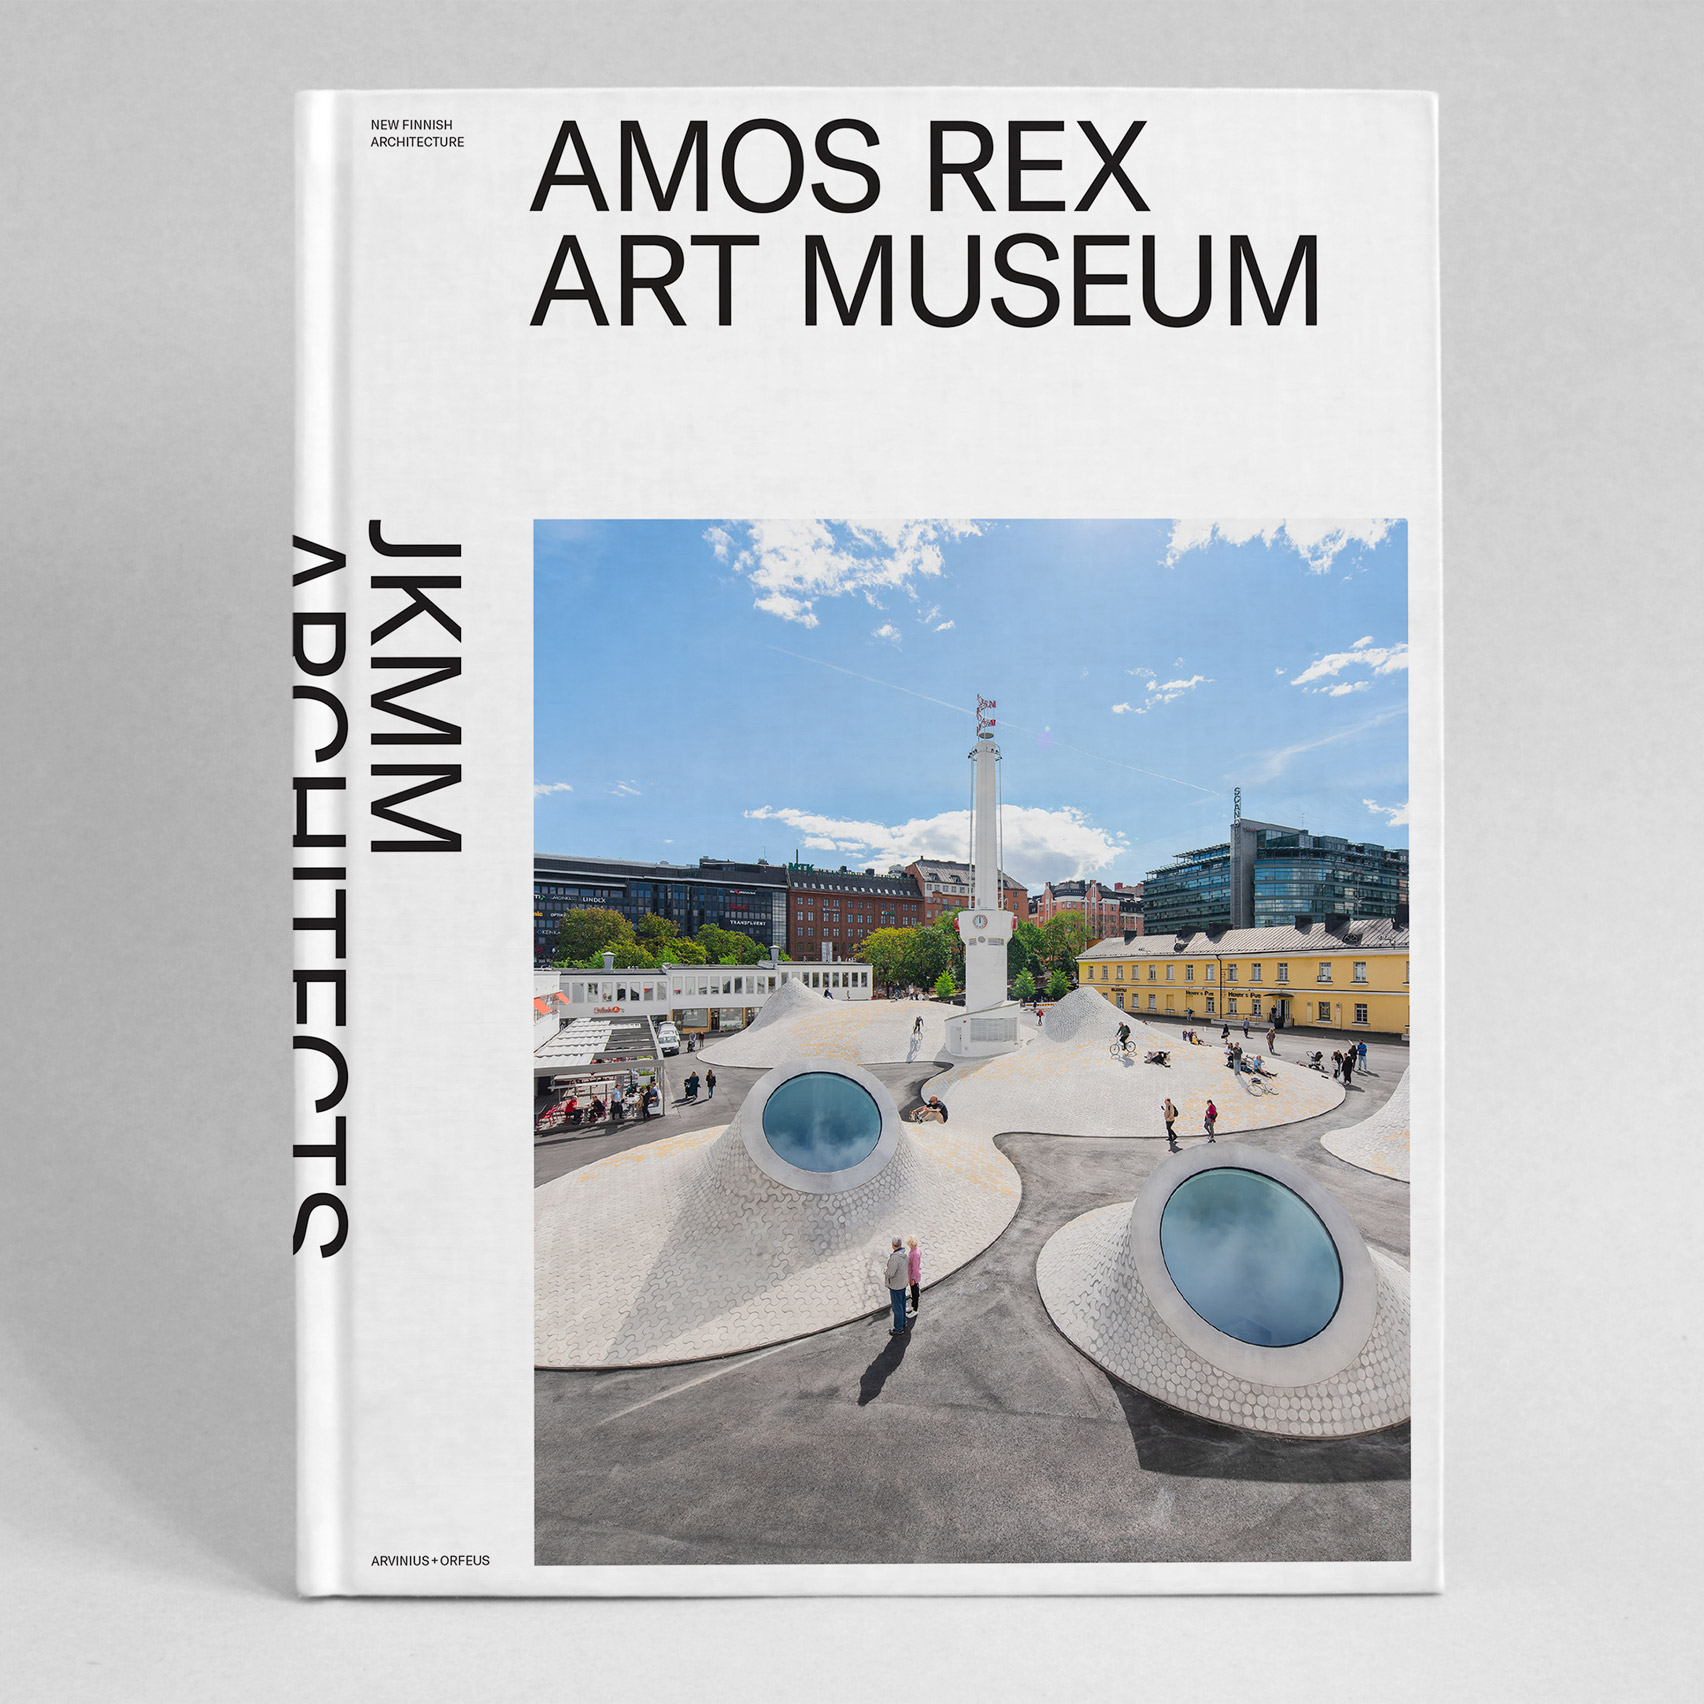 Amos Rex Art Museum – JKMM Architects